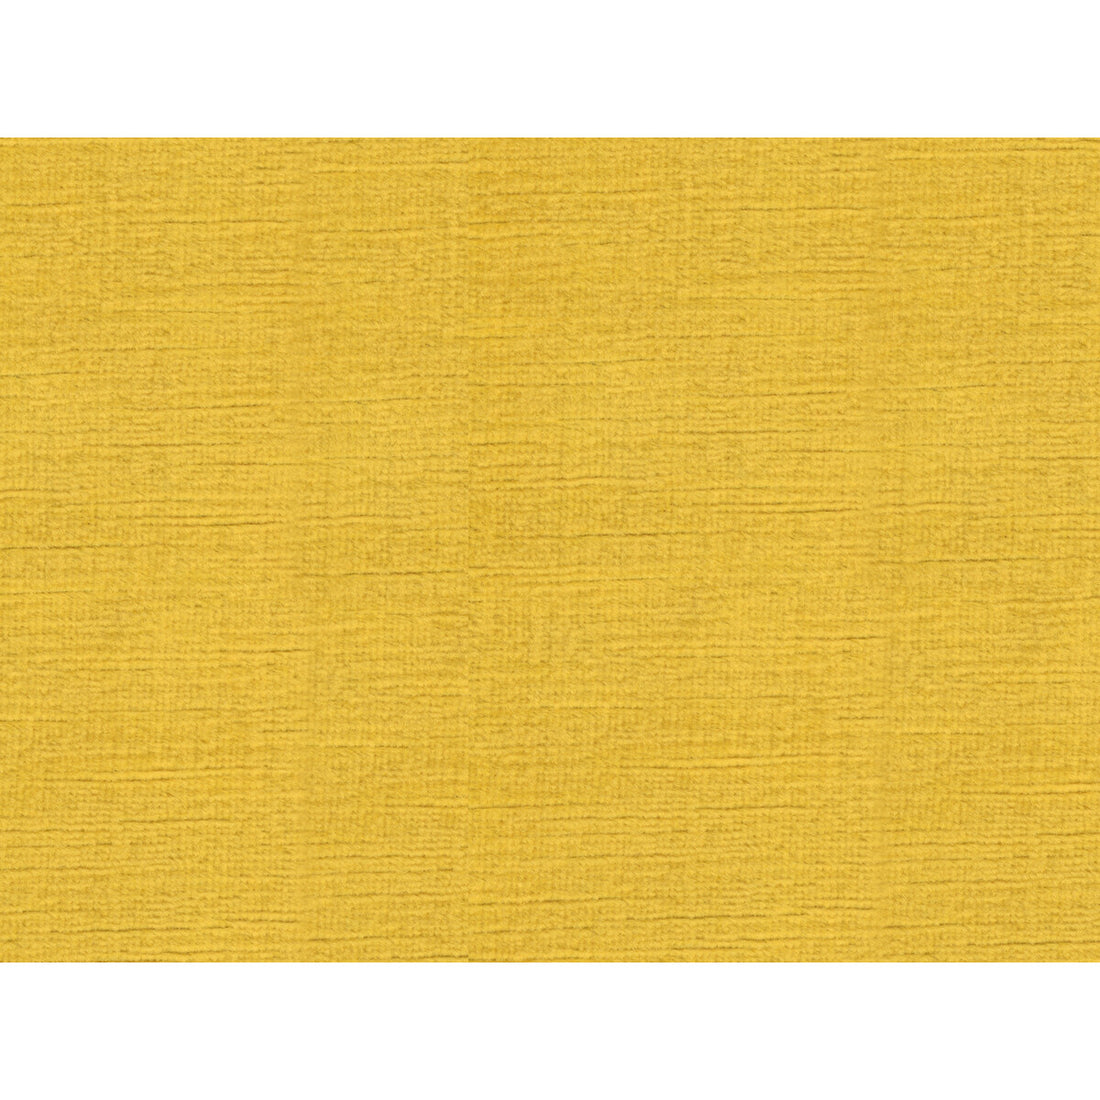 Fulham Linen V fabric in lemon color - pattern 2016133.1404.0 - by Lee Jofa